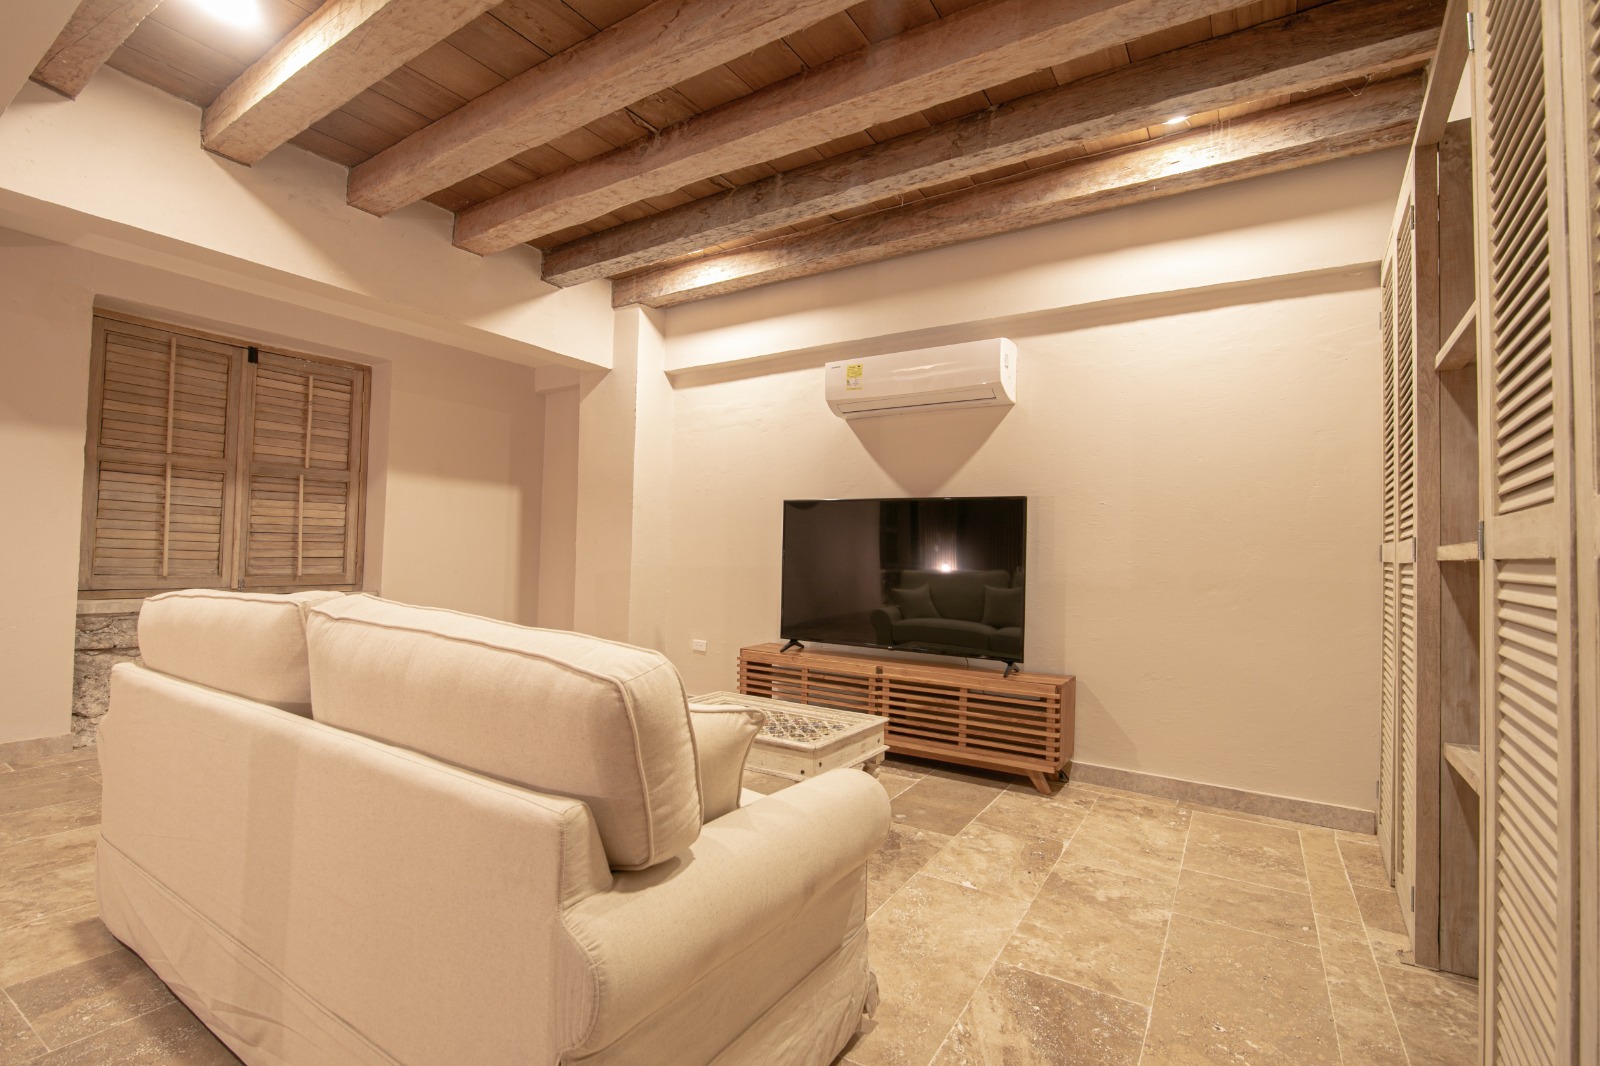 Cartagena Getsemani completely restored, now modern 7 bedroom house